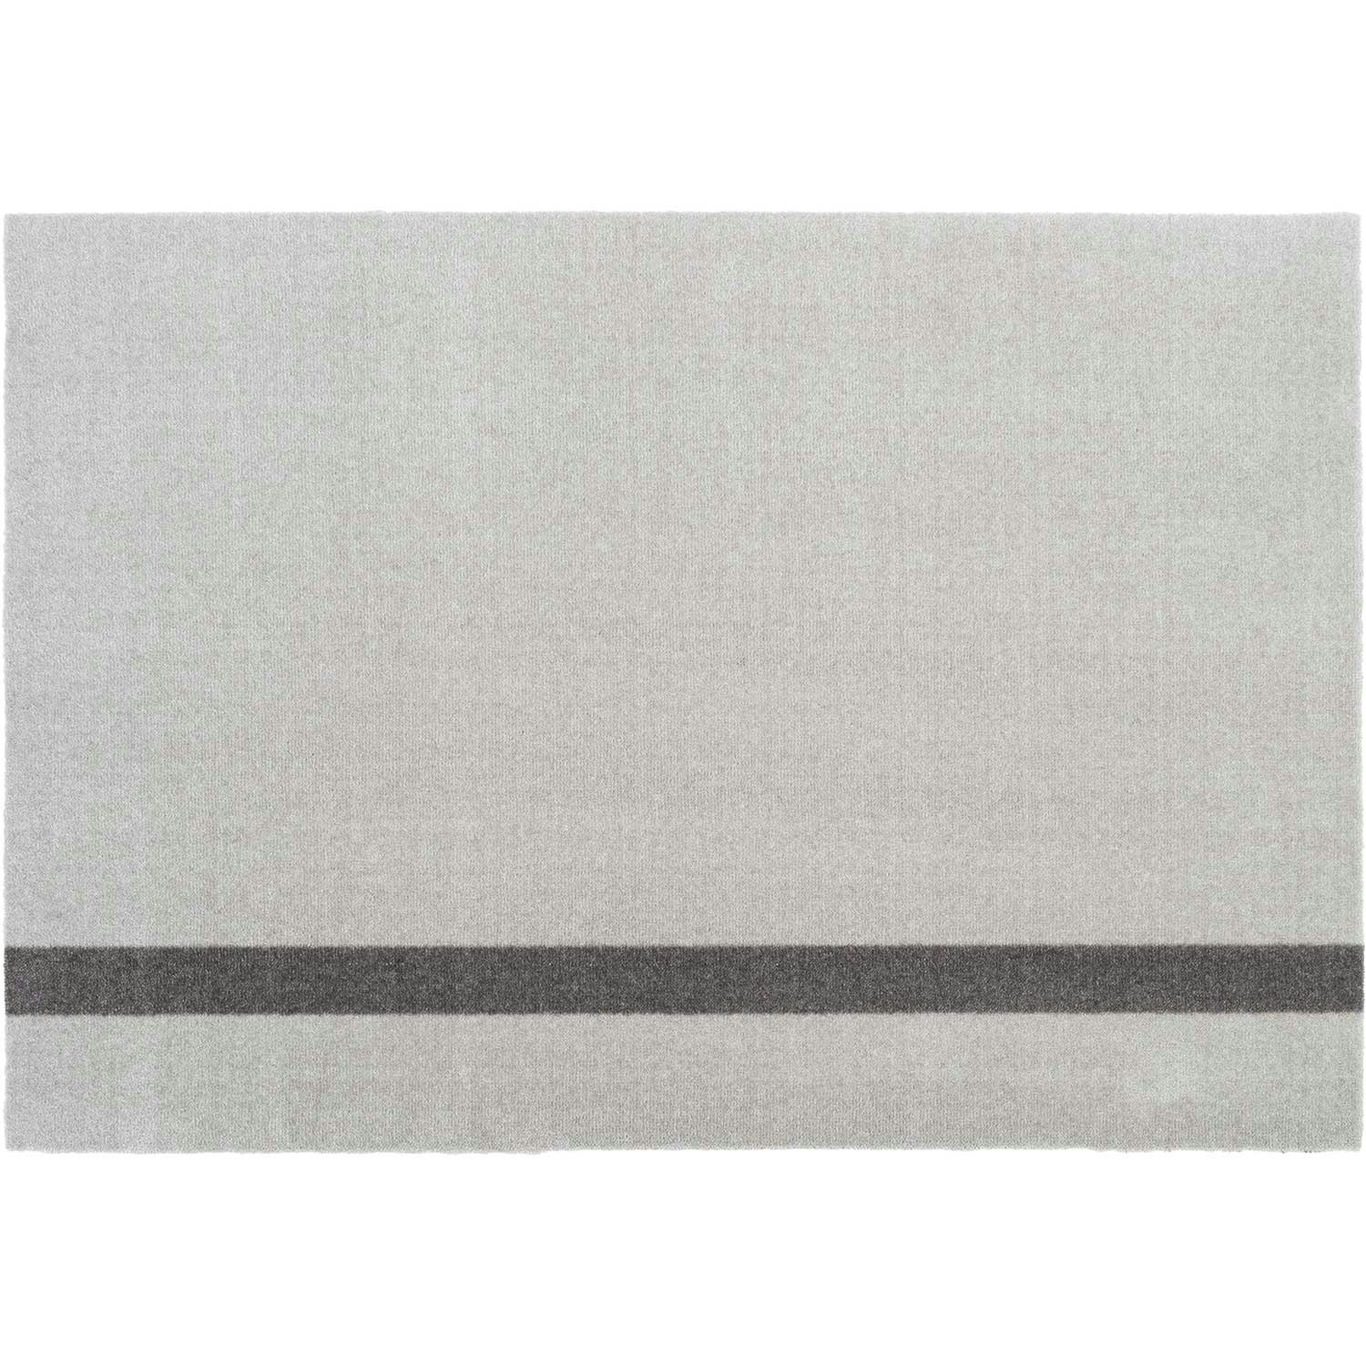 Stripes Vertikal Rug Light Grey / Steel Grey, 90x130 cm